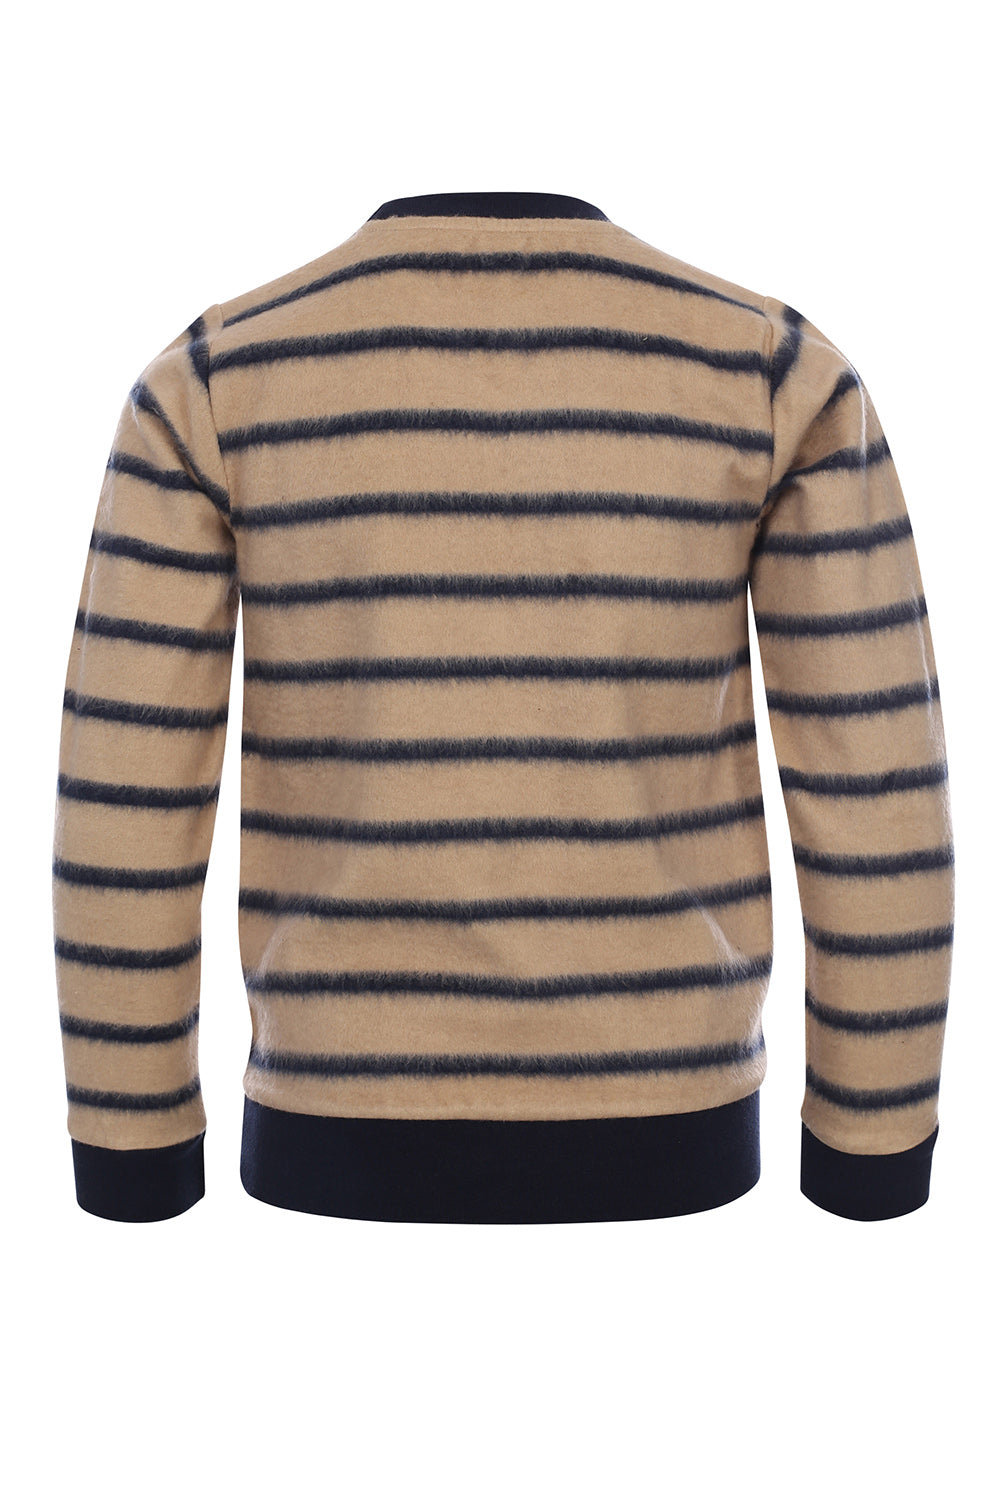 Common Heroes Stripe Sweater